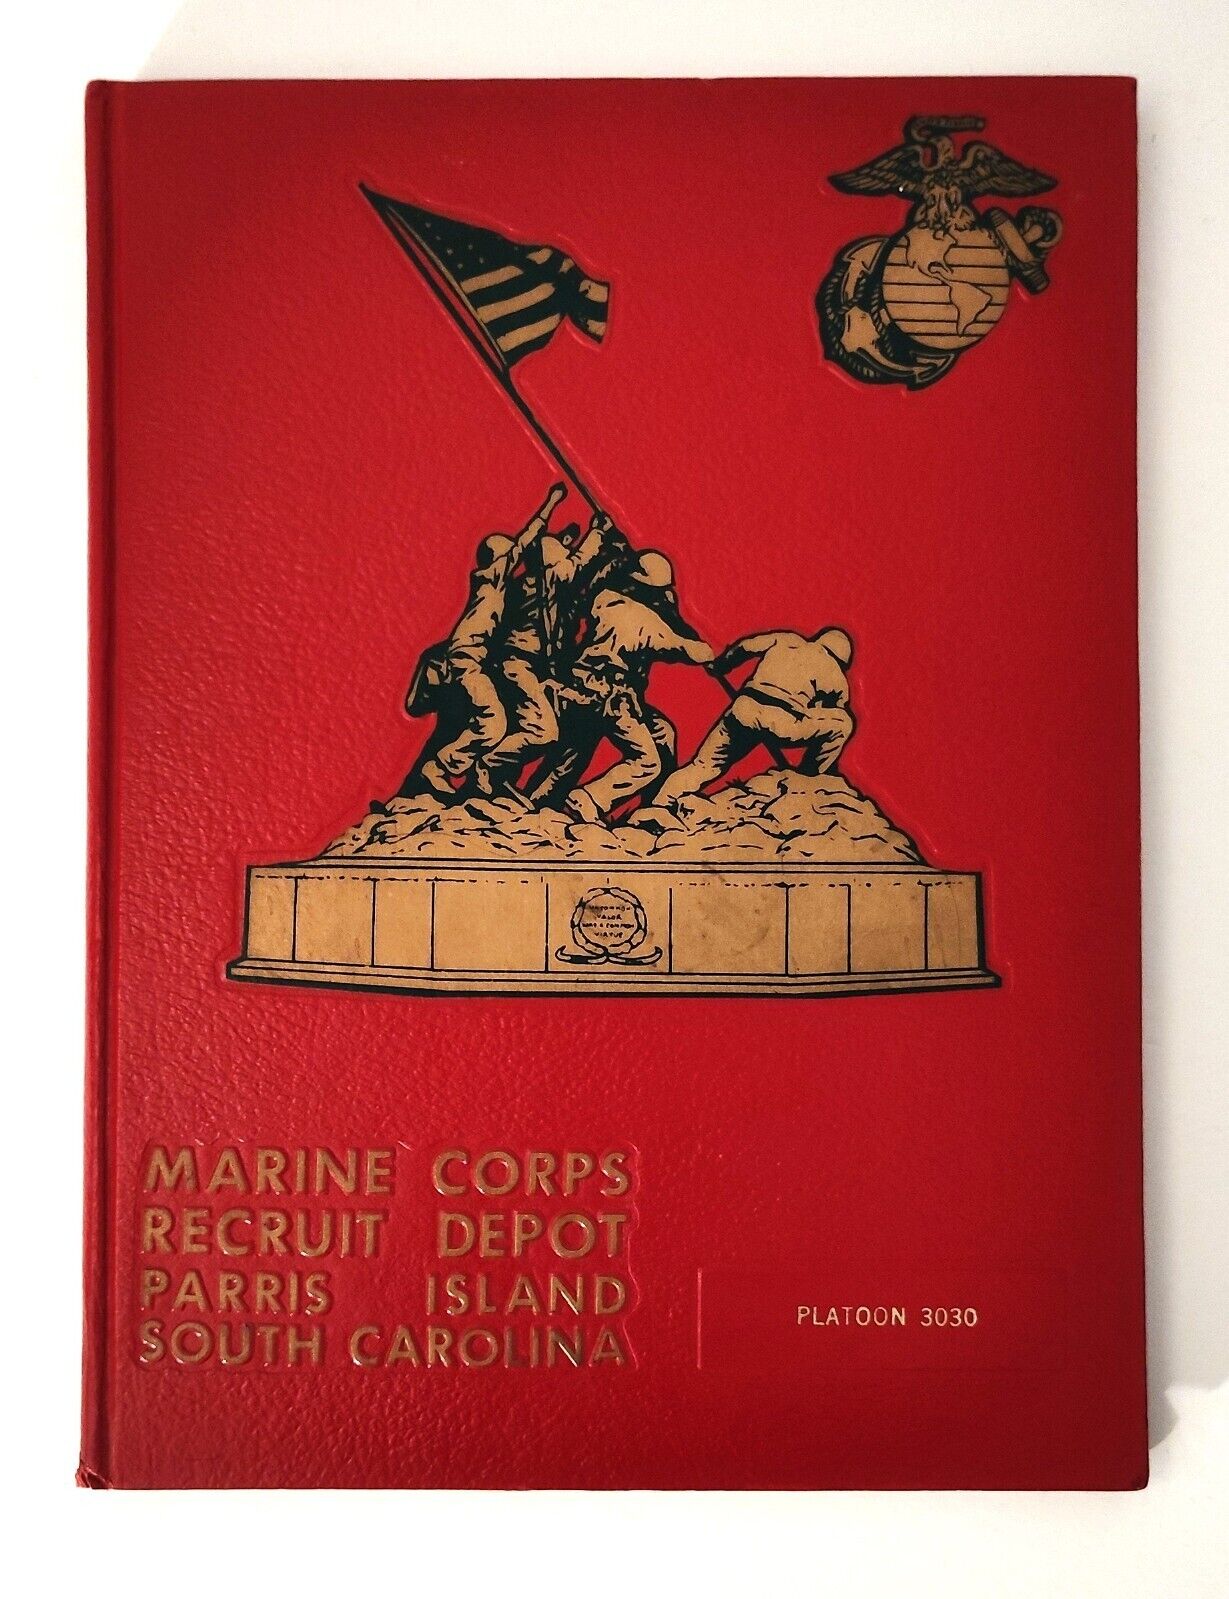 MARINE CORPS RECRUIT DEPOT. 1966. PARRIS ISLAND SOUTH CAROLINA. Platoon 3030